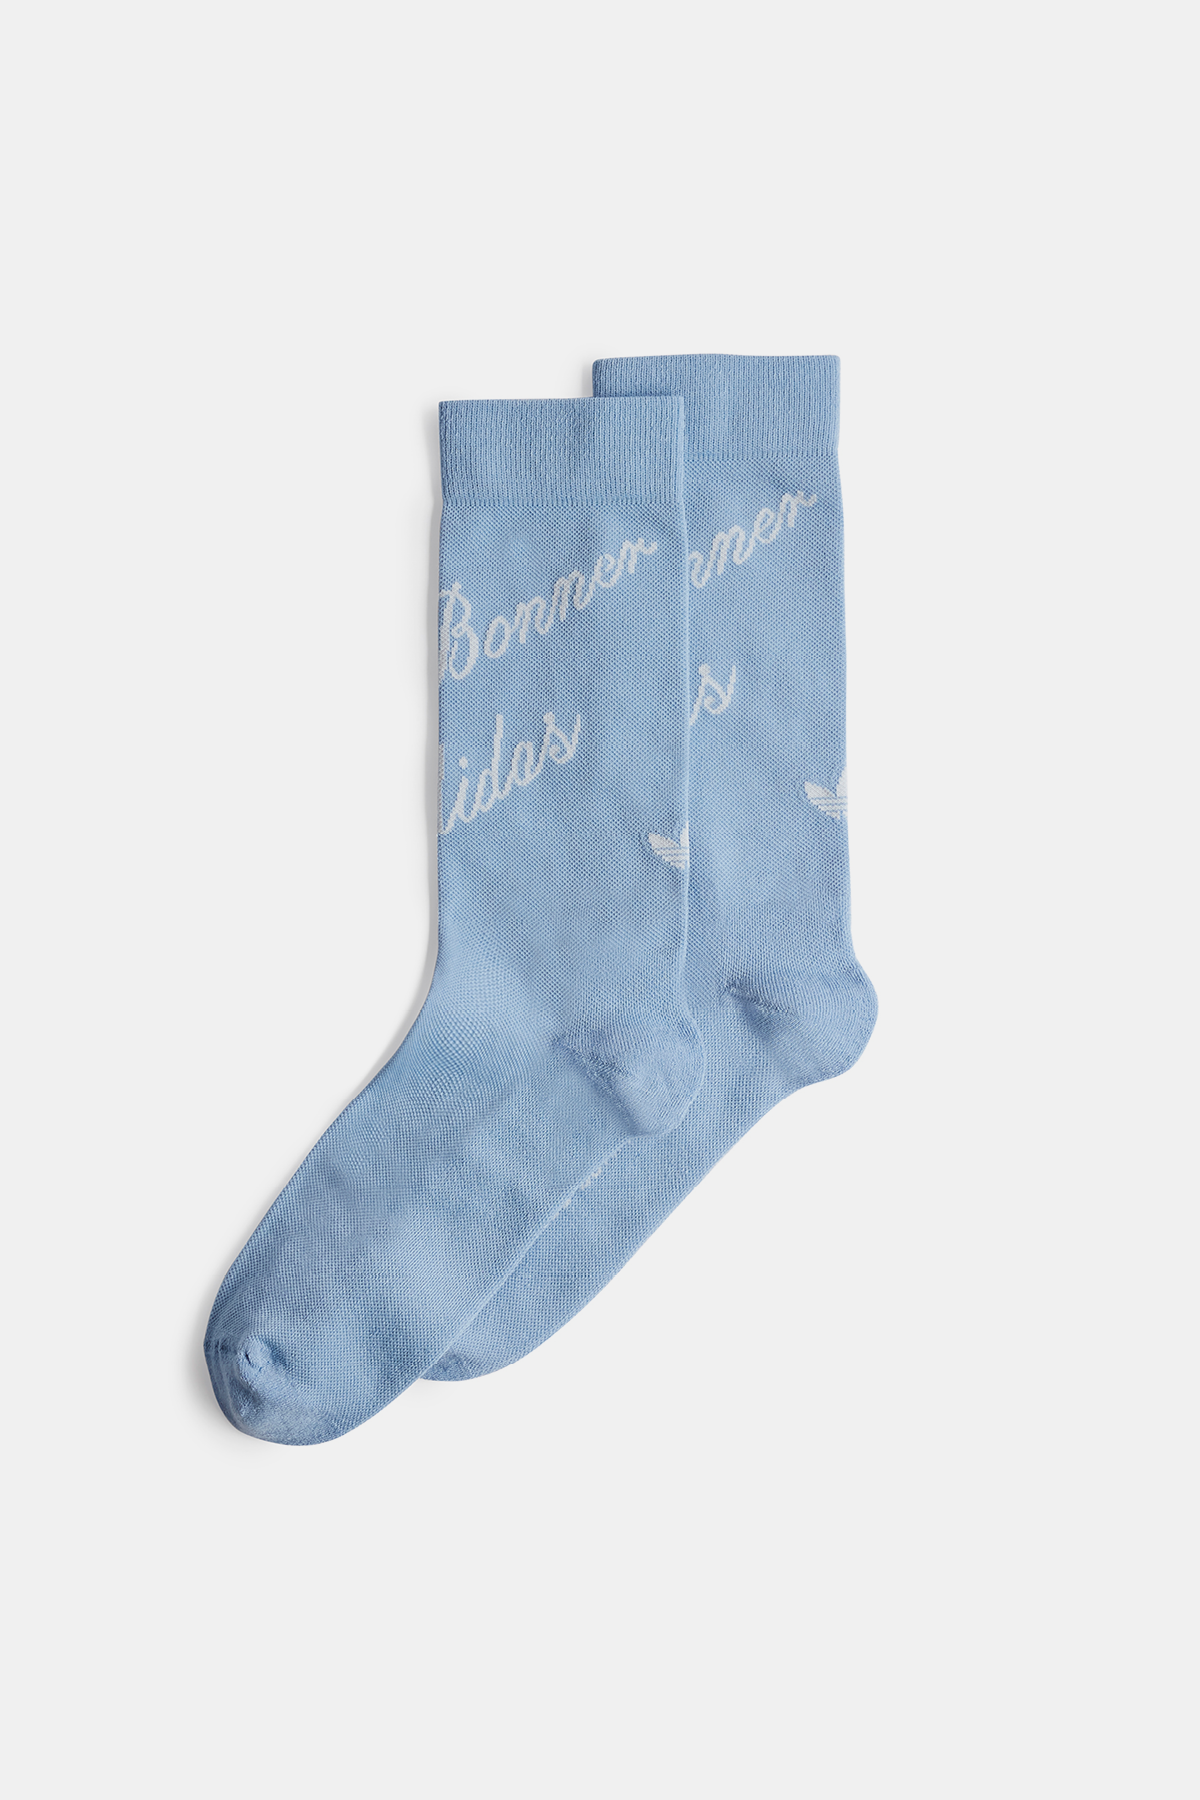 adidas x Wales Bonner Short Socks - Ash Blue